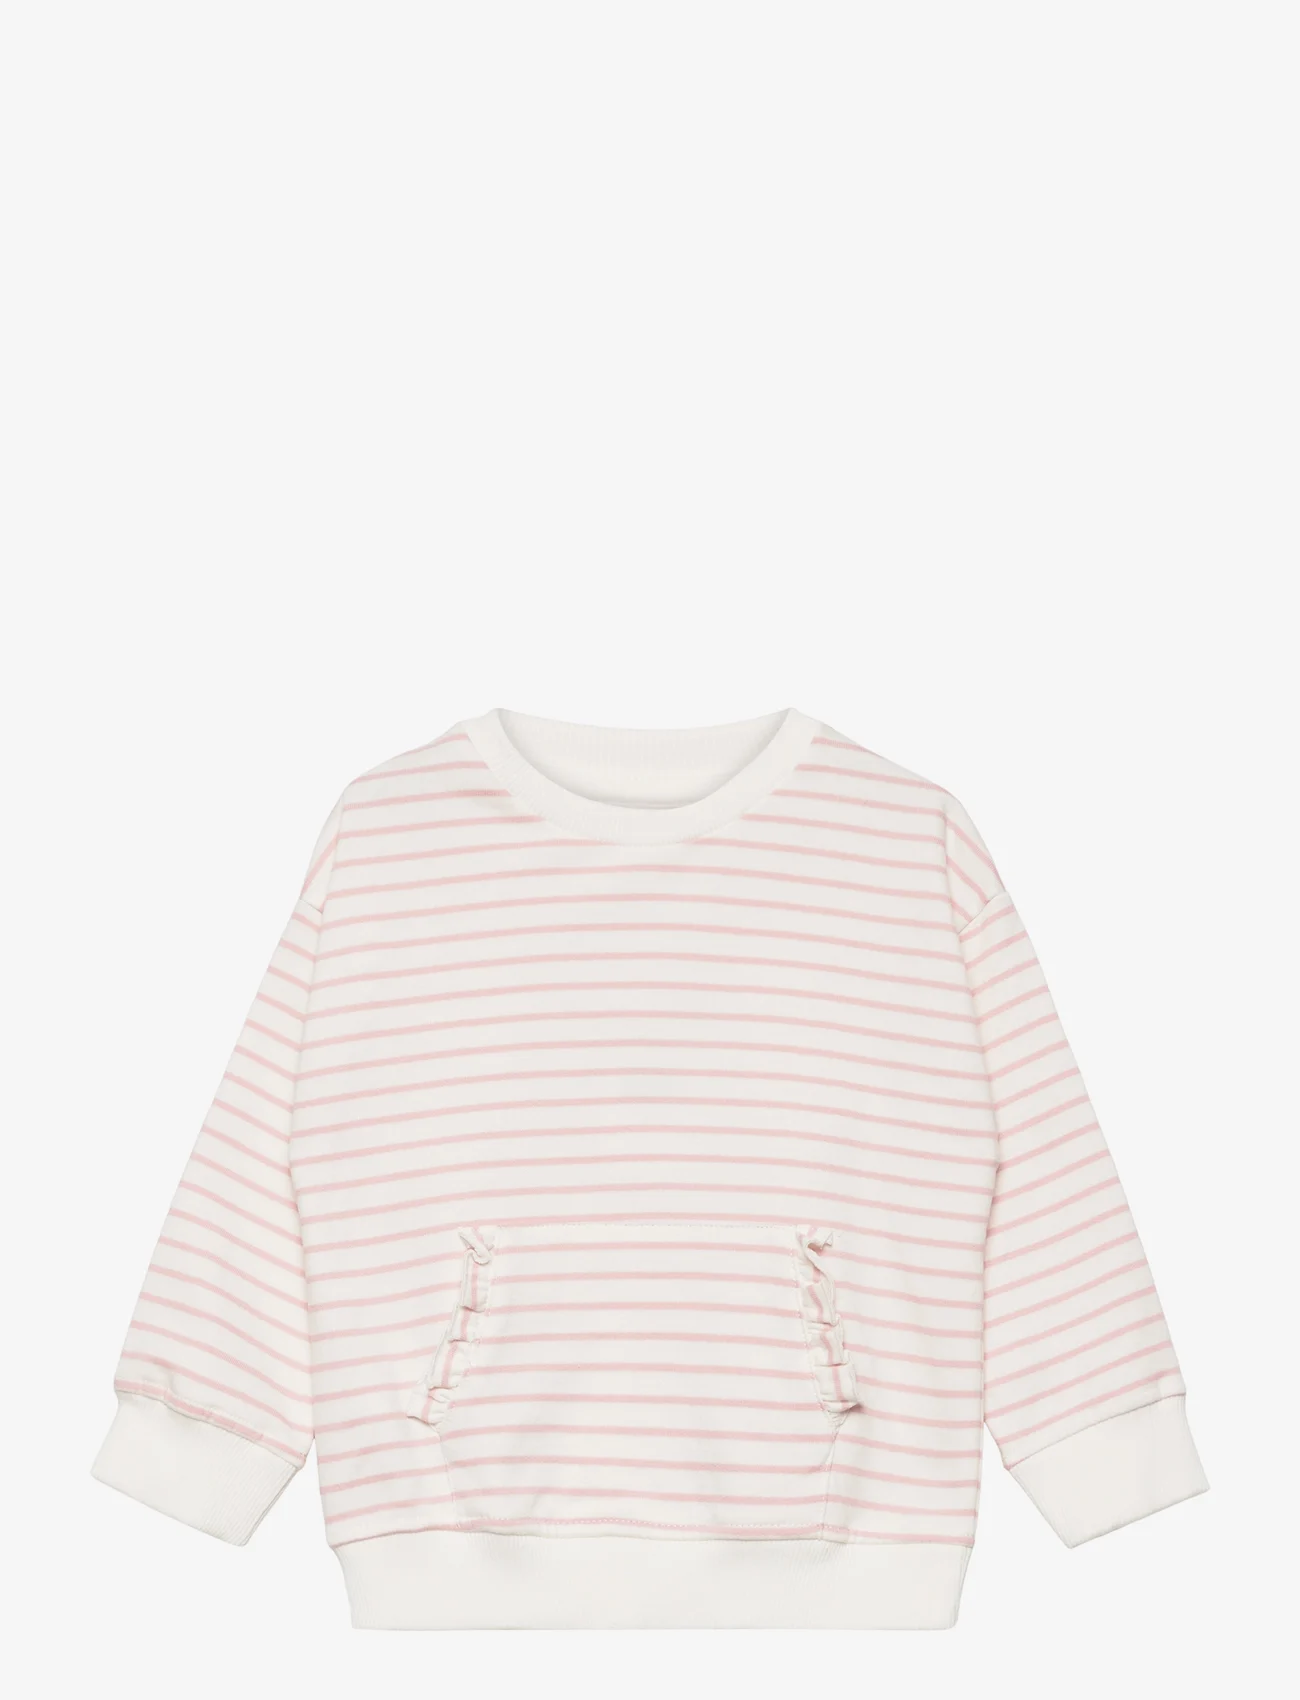 Mango - Striped cotton-blend sweatshirt - svetarit - pink - 0